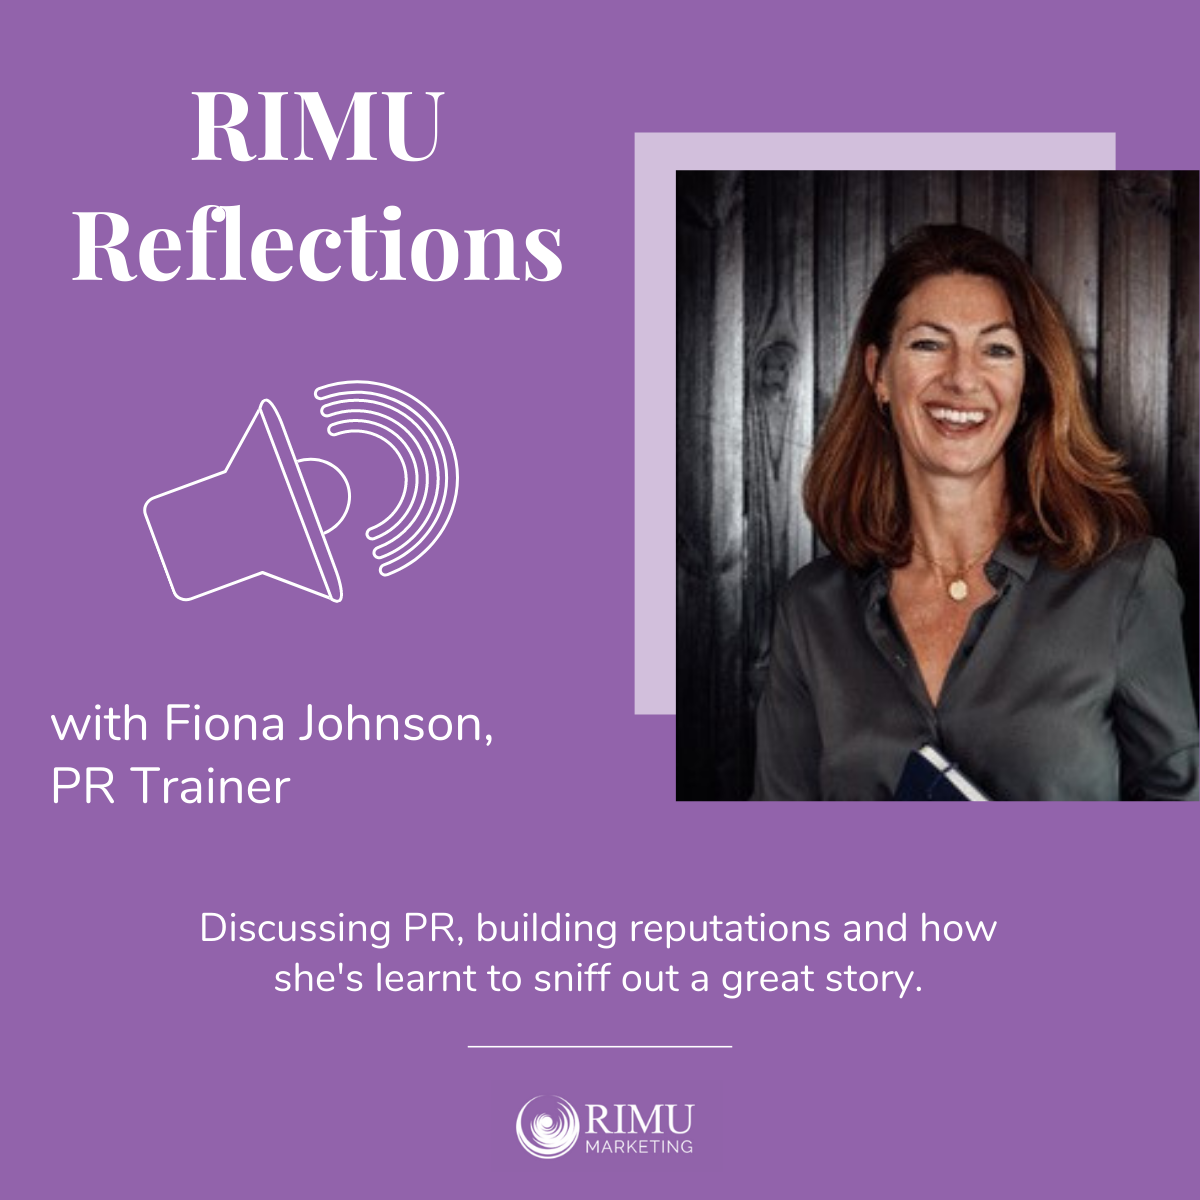 RIMU Reflections - Vlog with Fiona Johnson PR